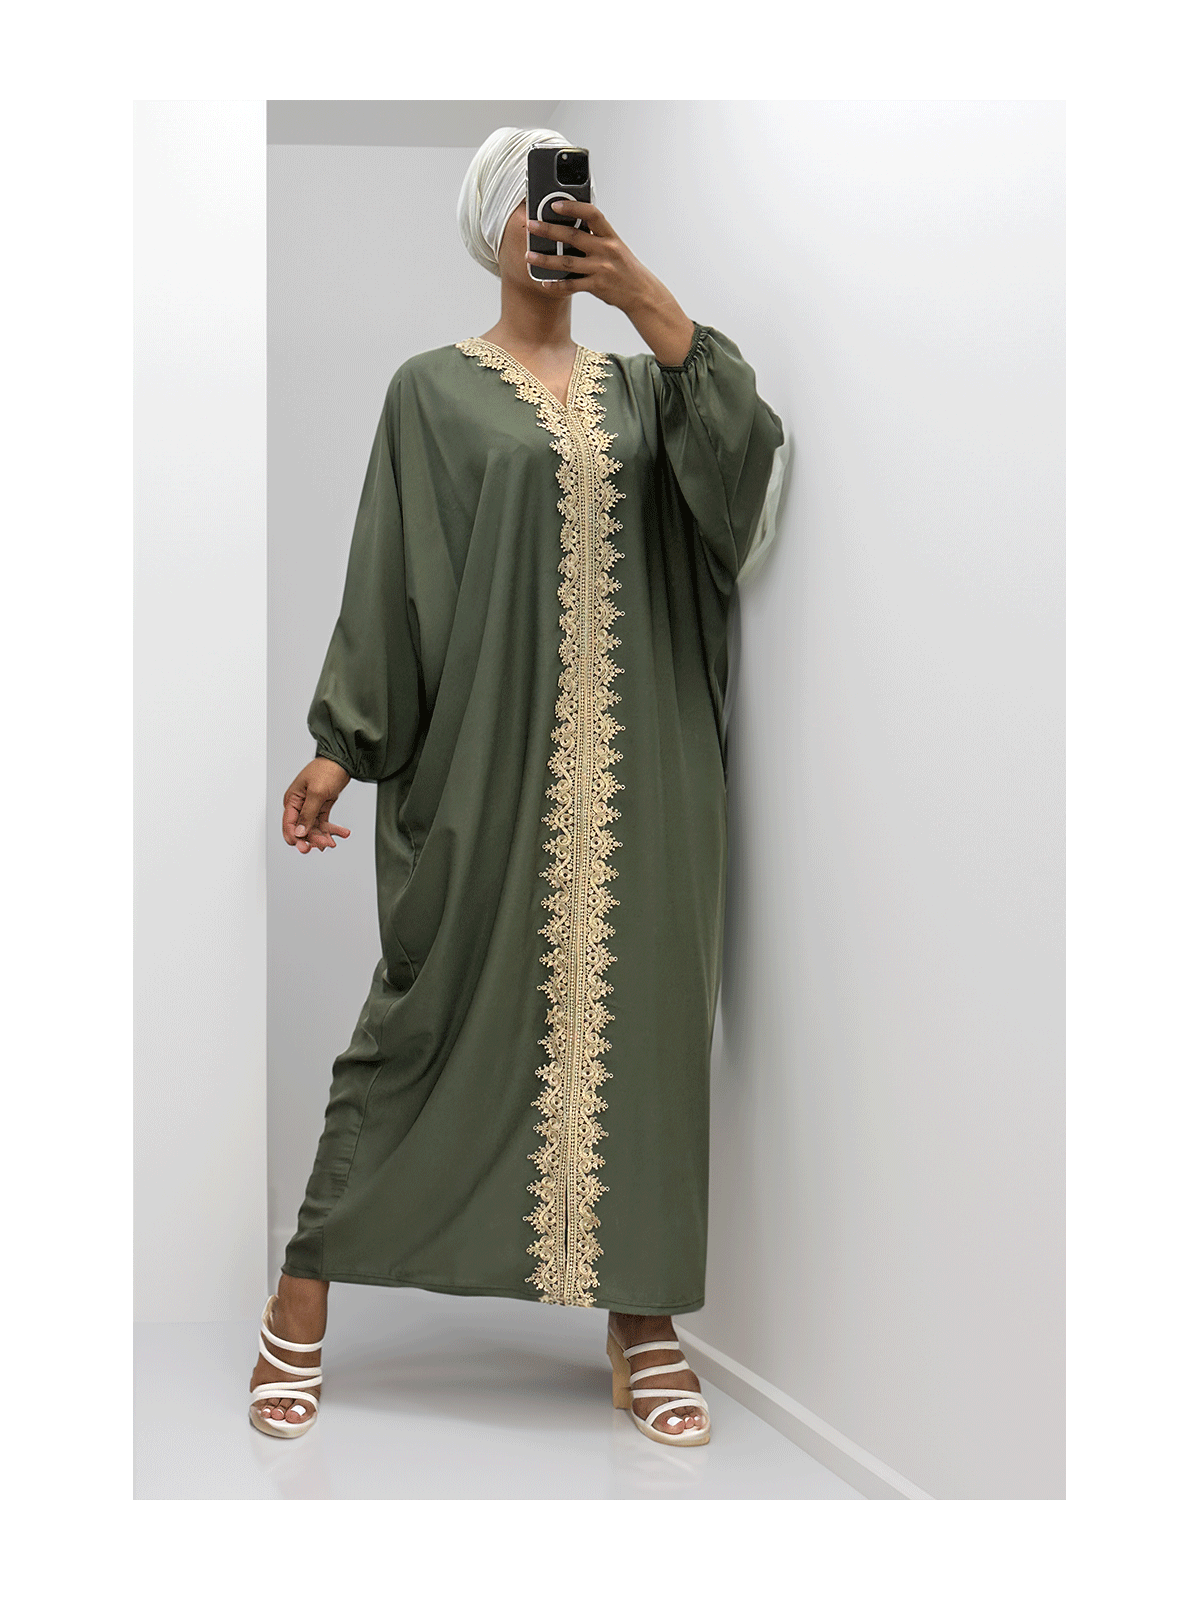 Longue abaya kaki over size avec une jolie dentelle  - 4